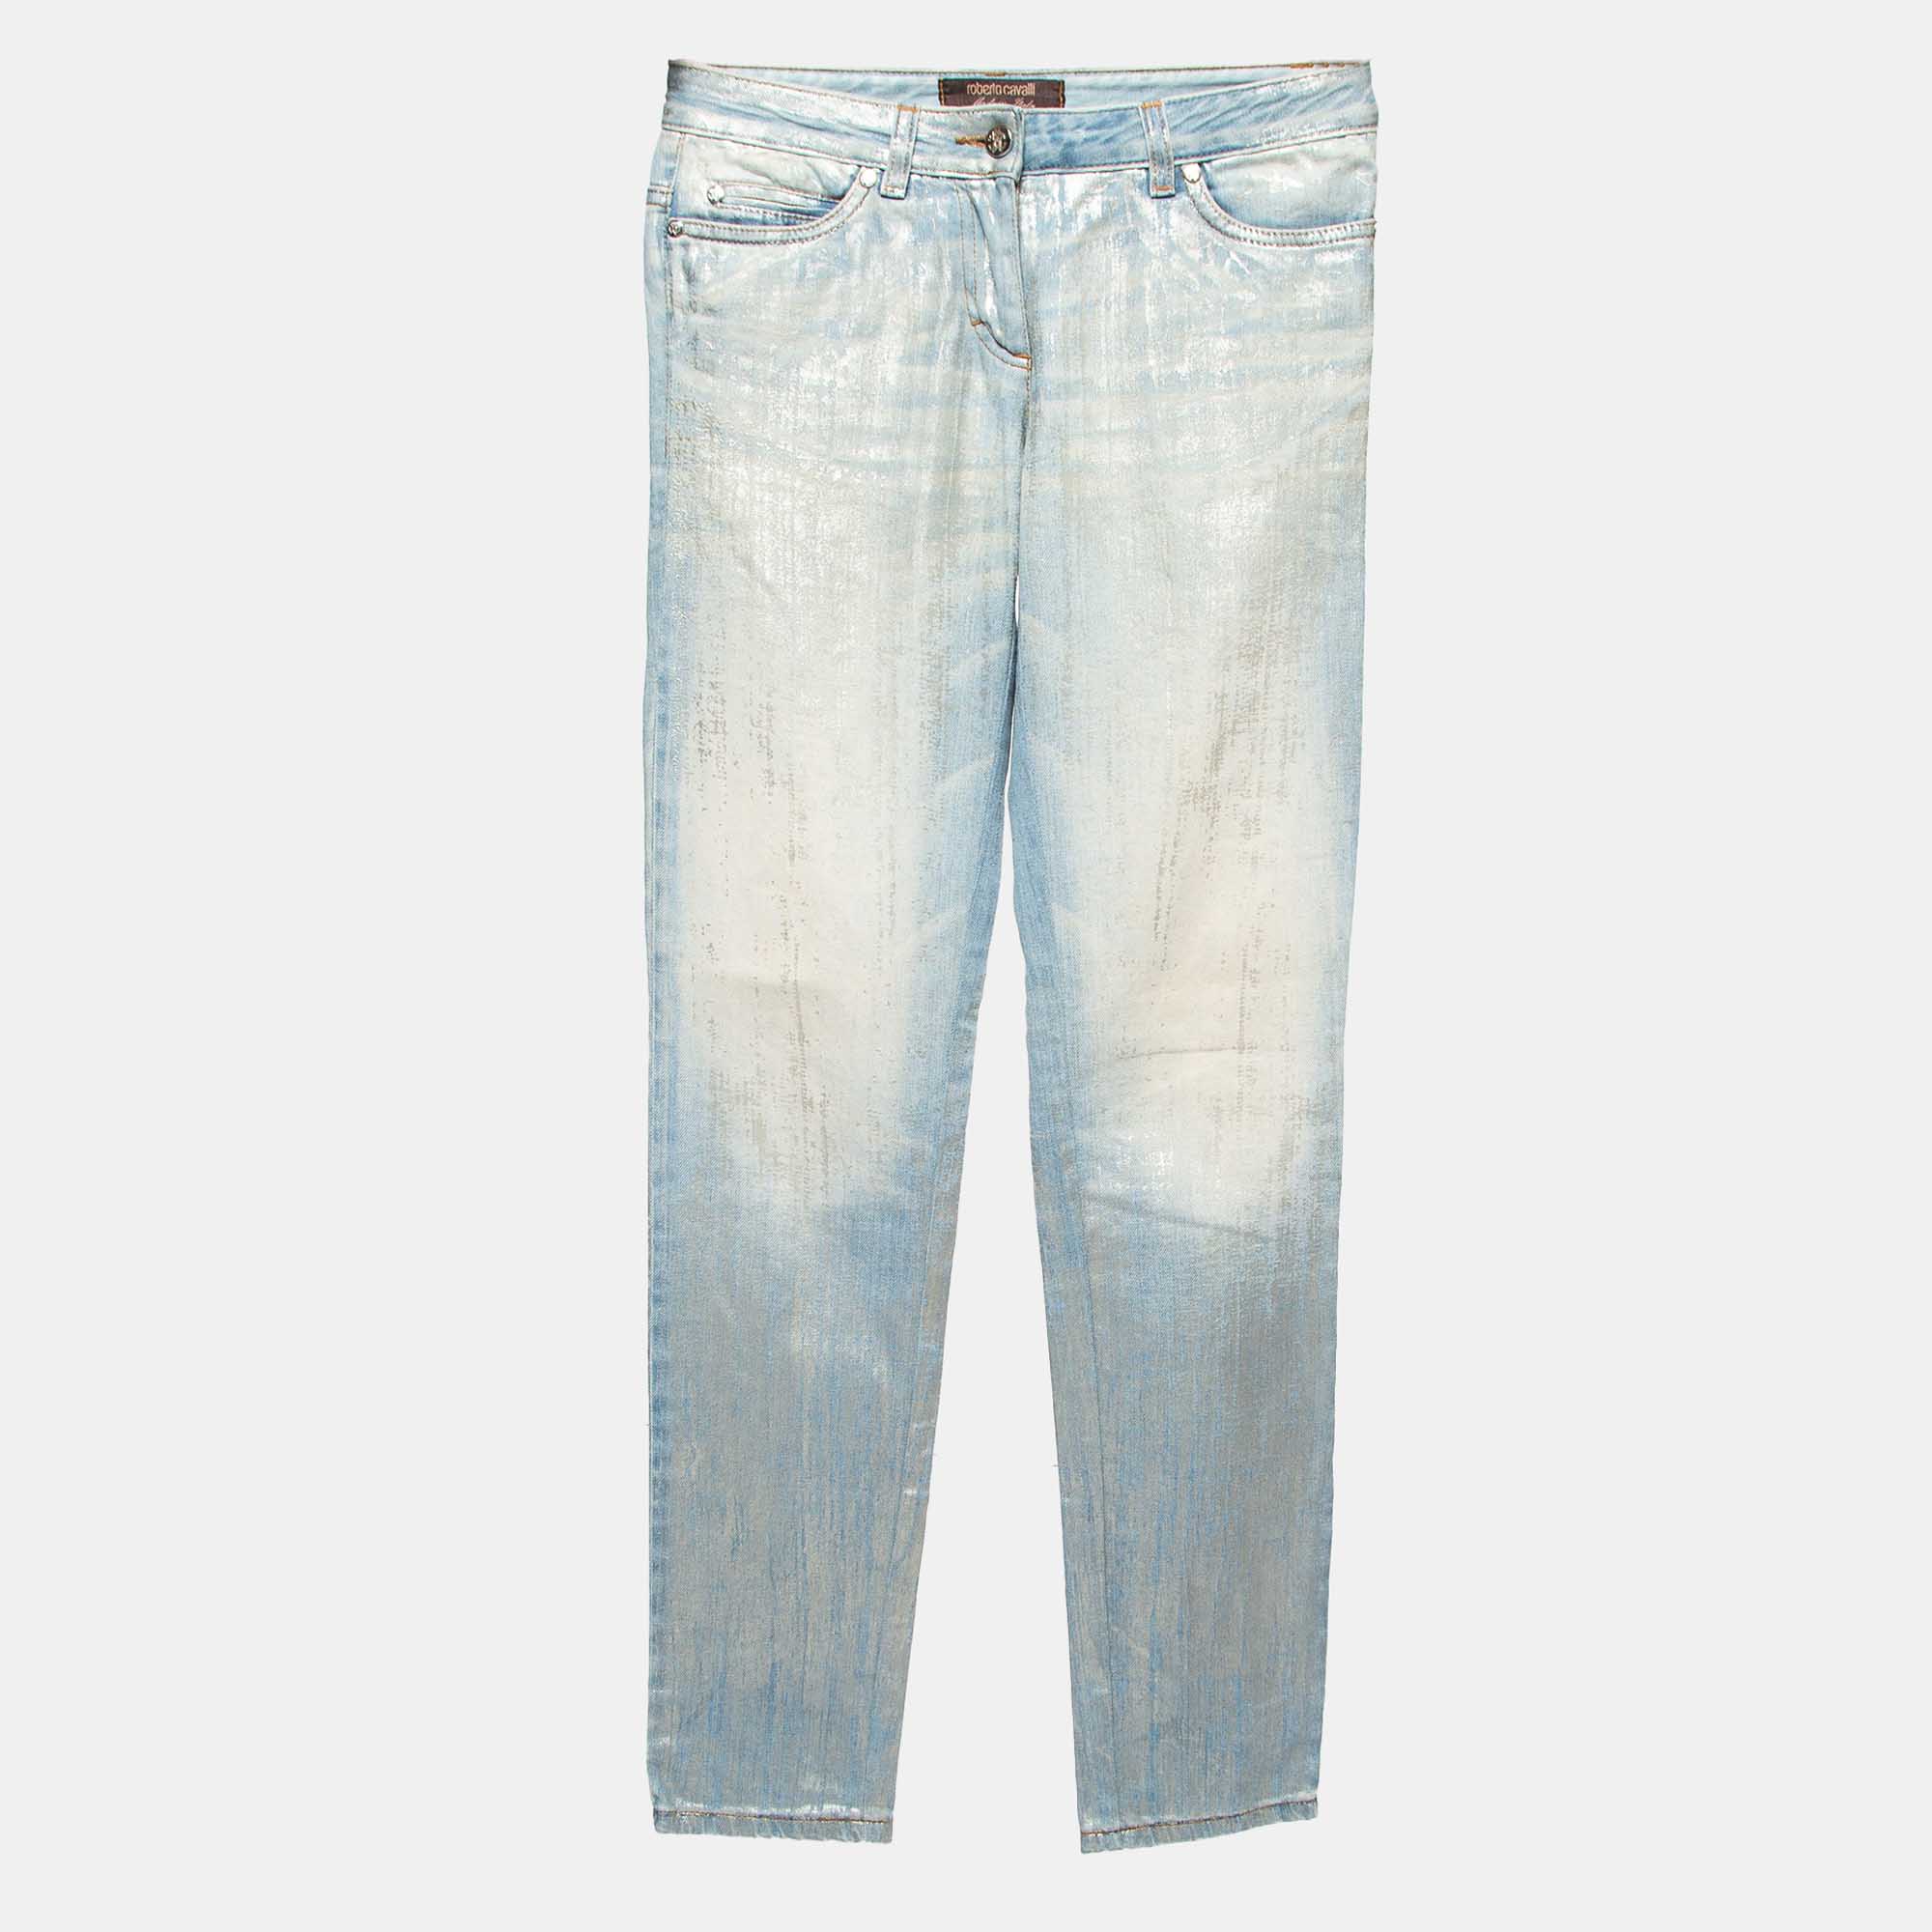 Roberto cavalli blue/silver metallic print denim jeans s waist 30''